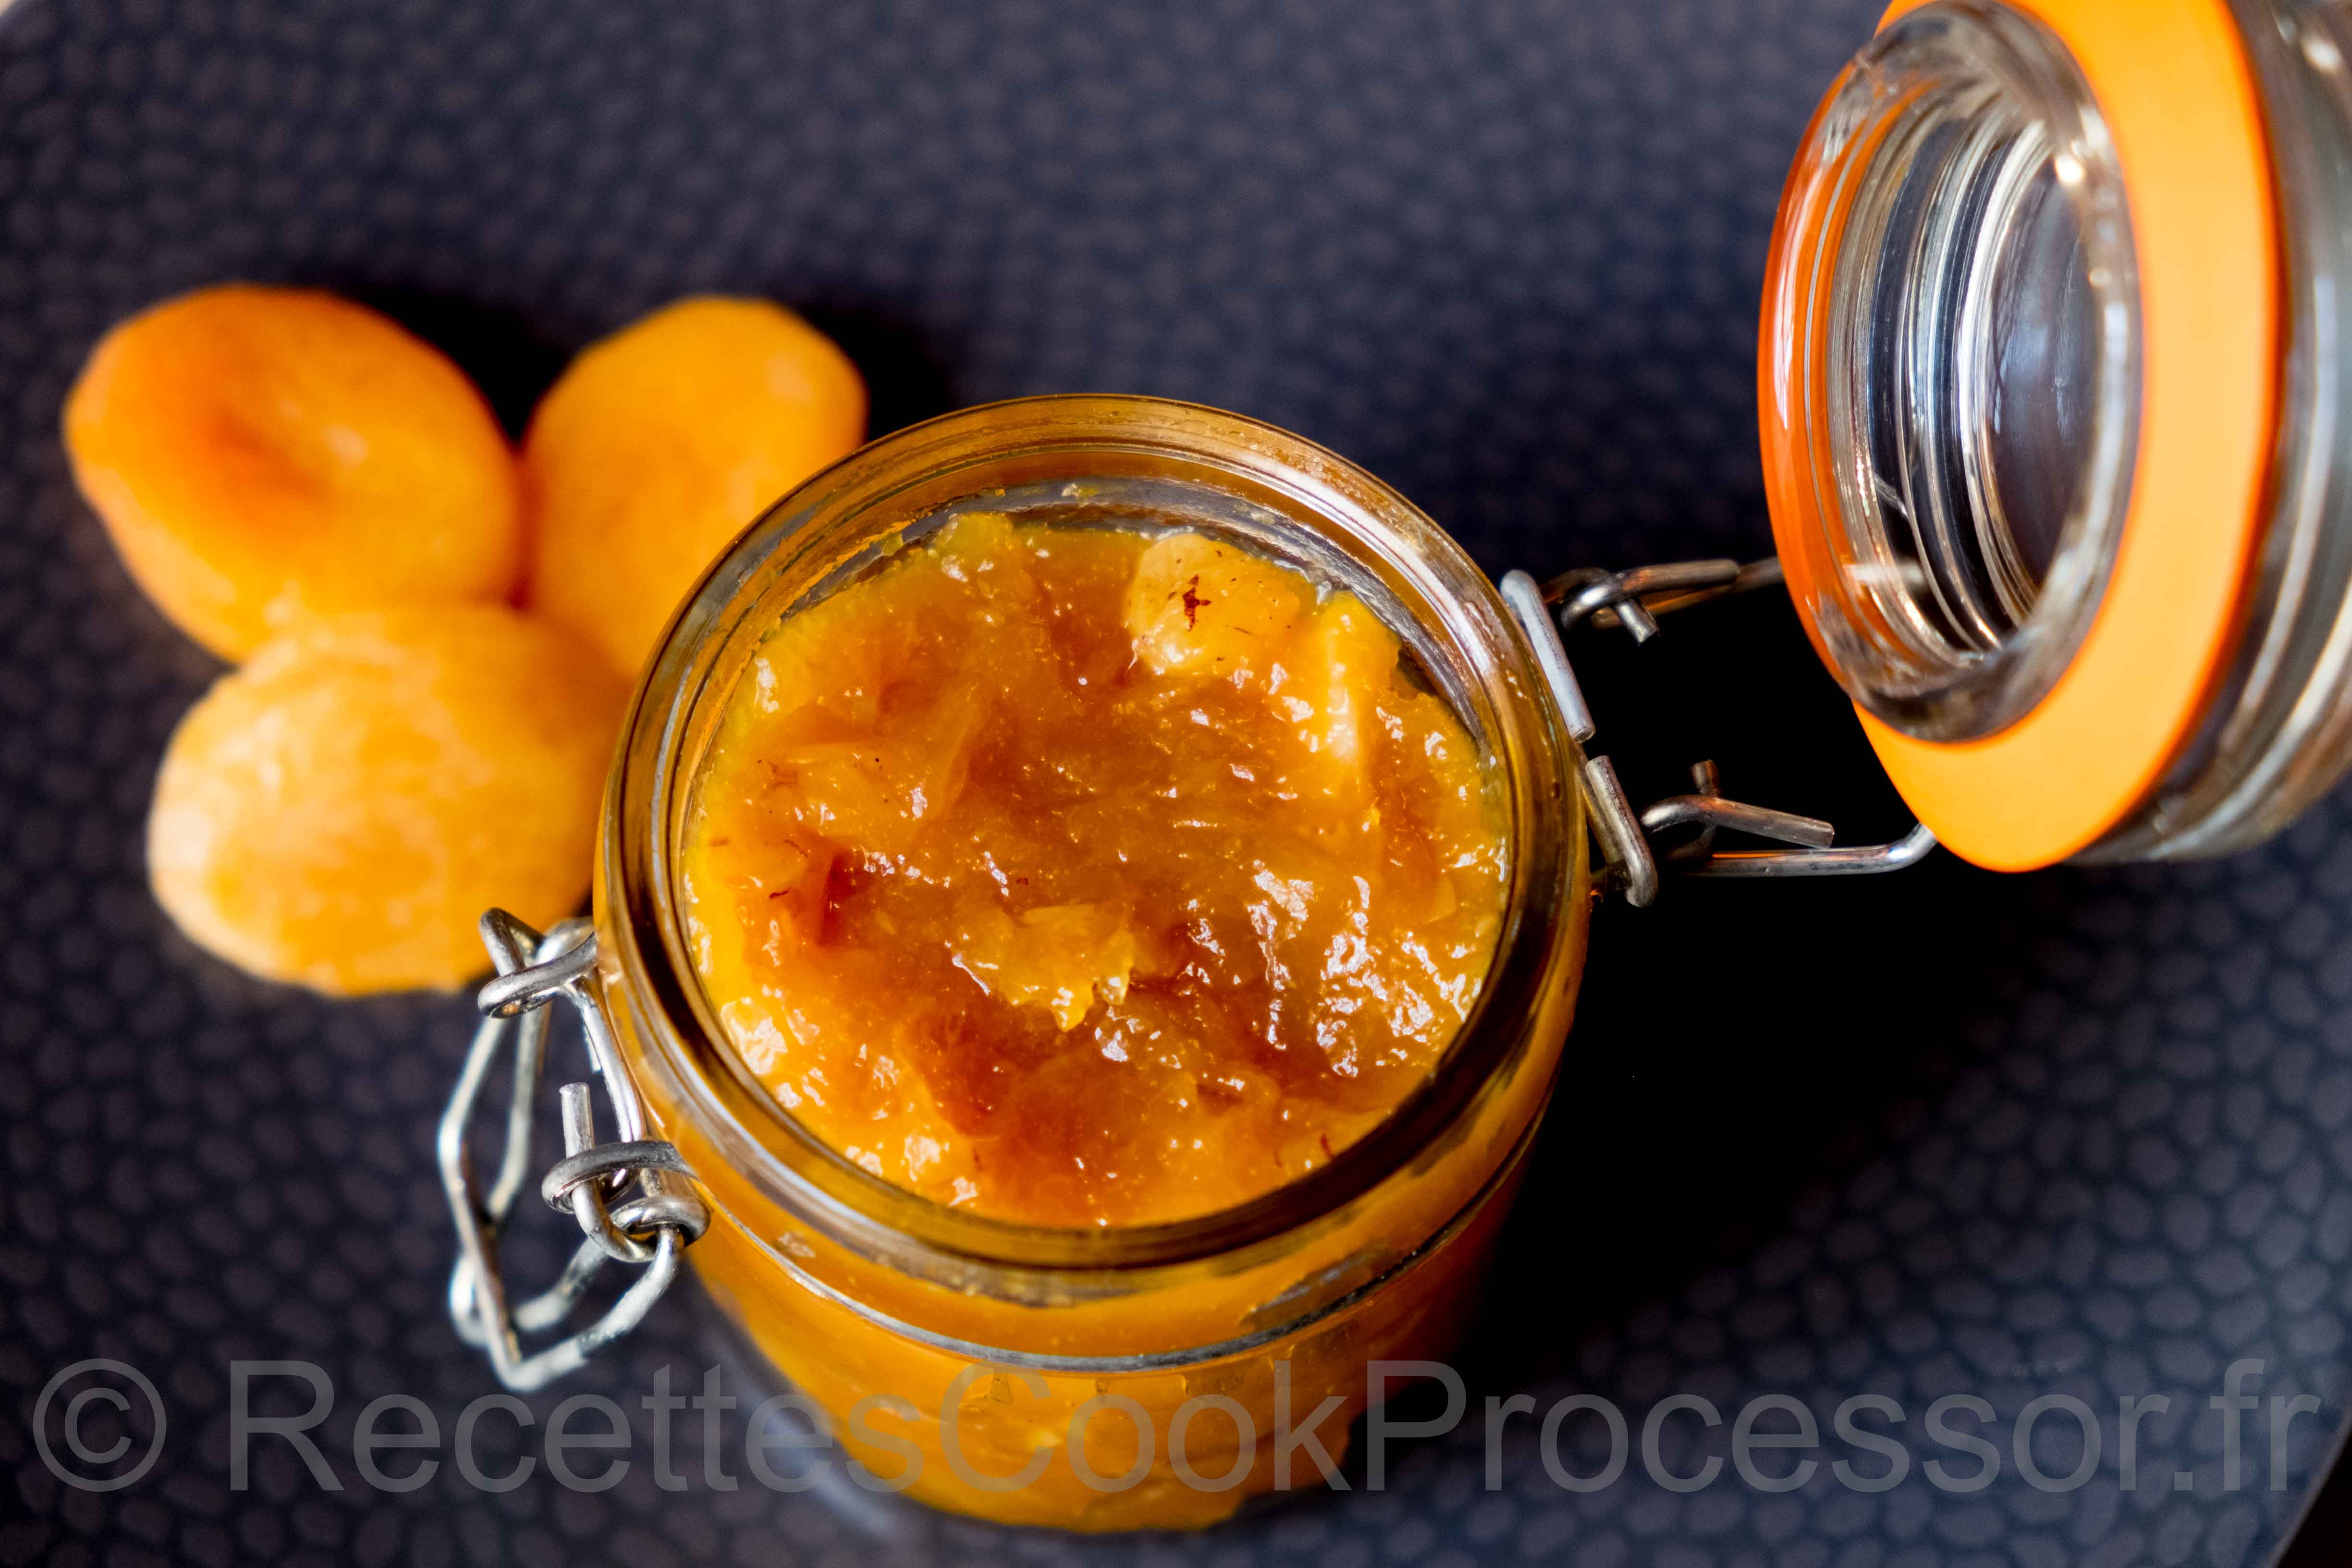 chutney aux abricots Cook Processor KitchenAid